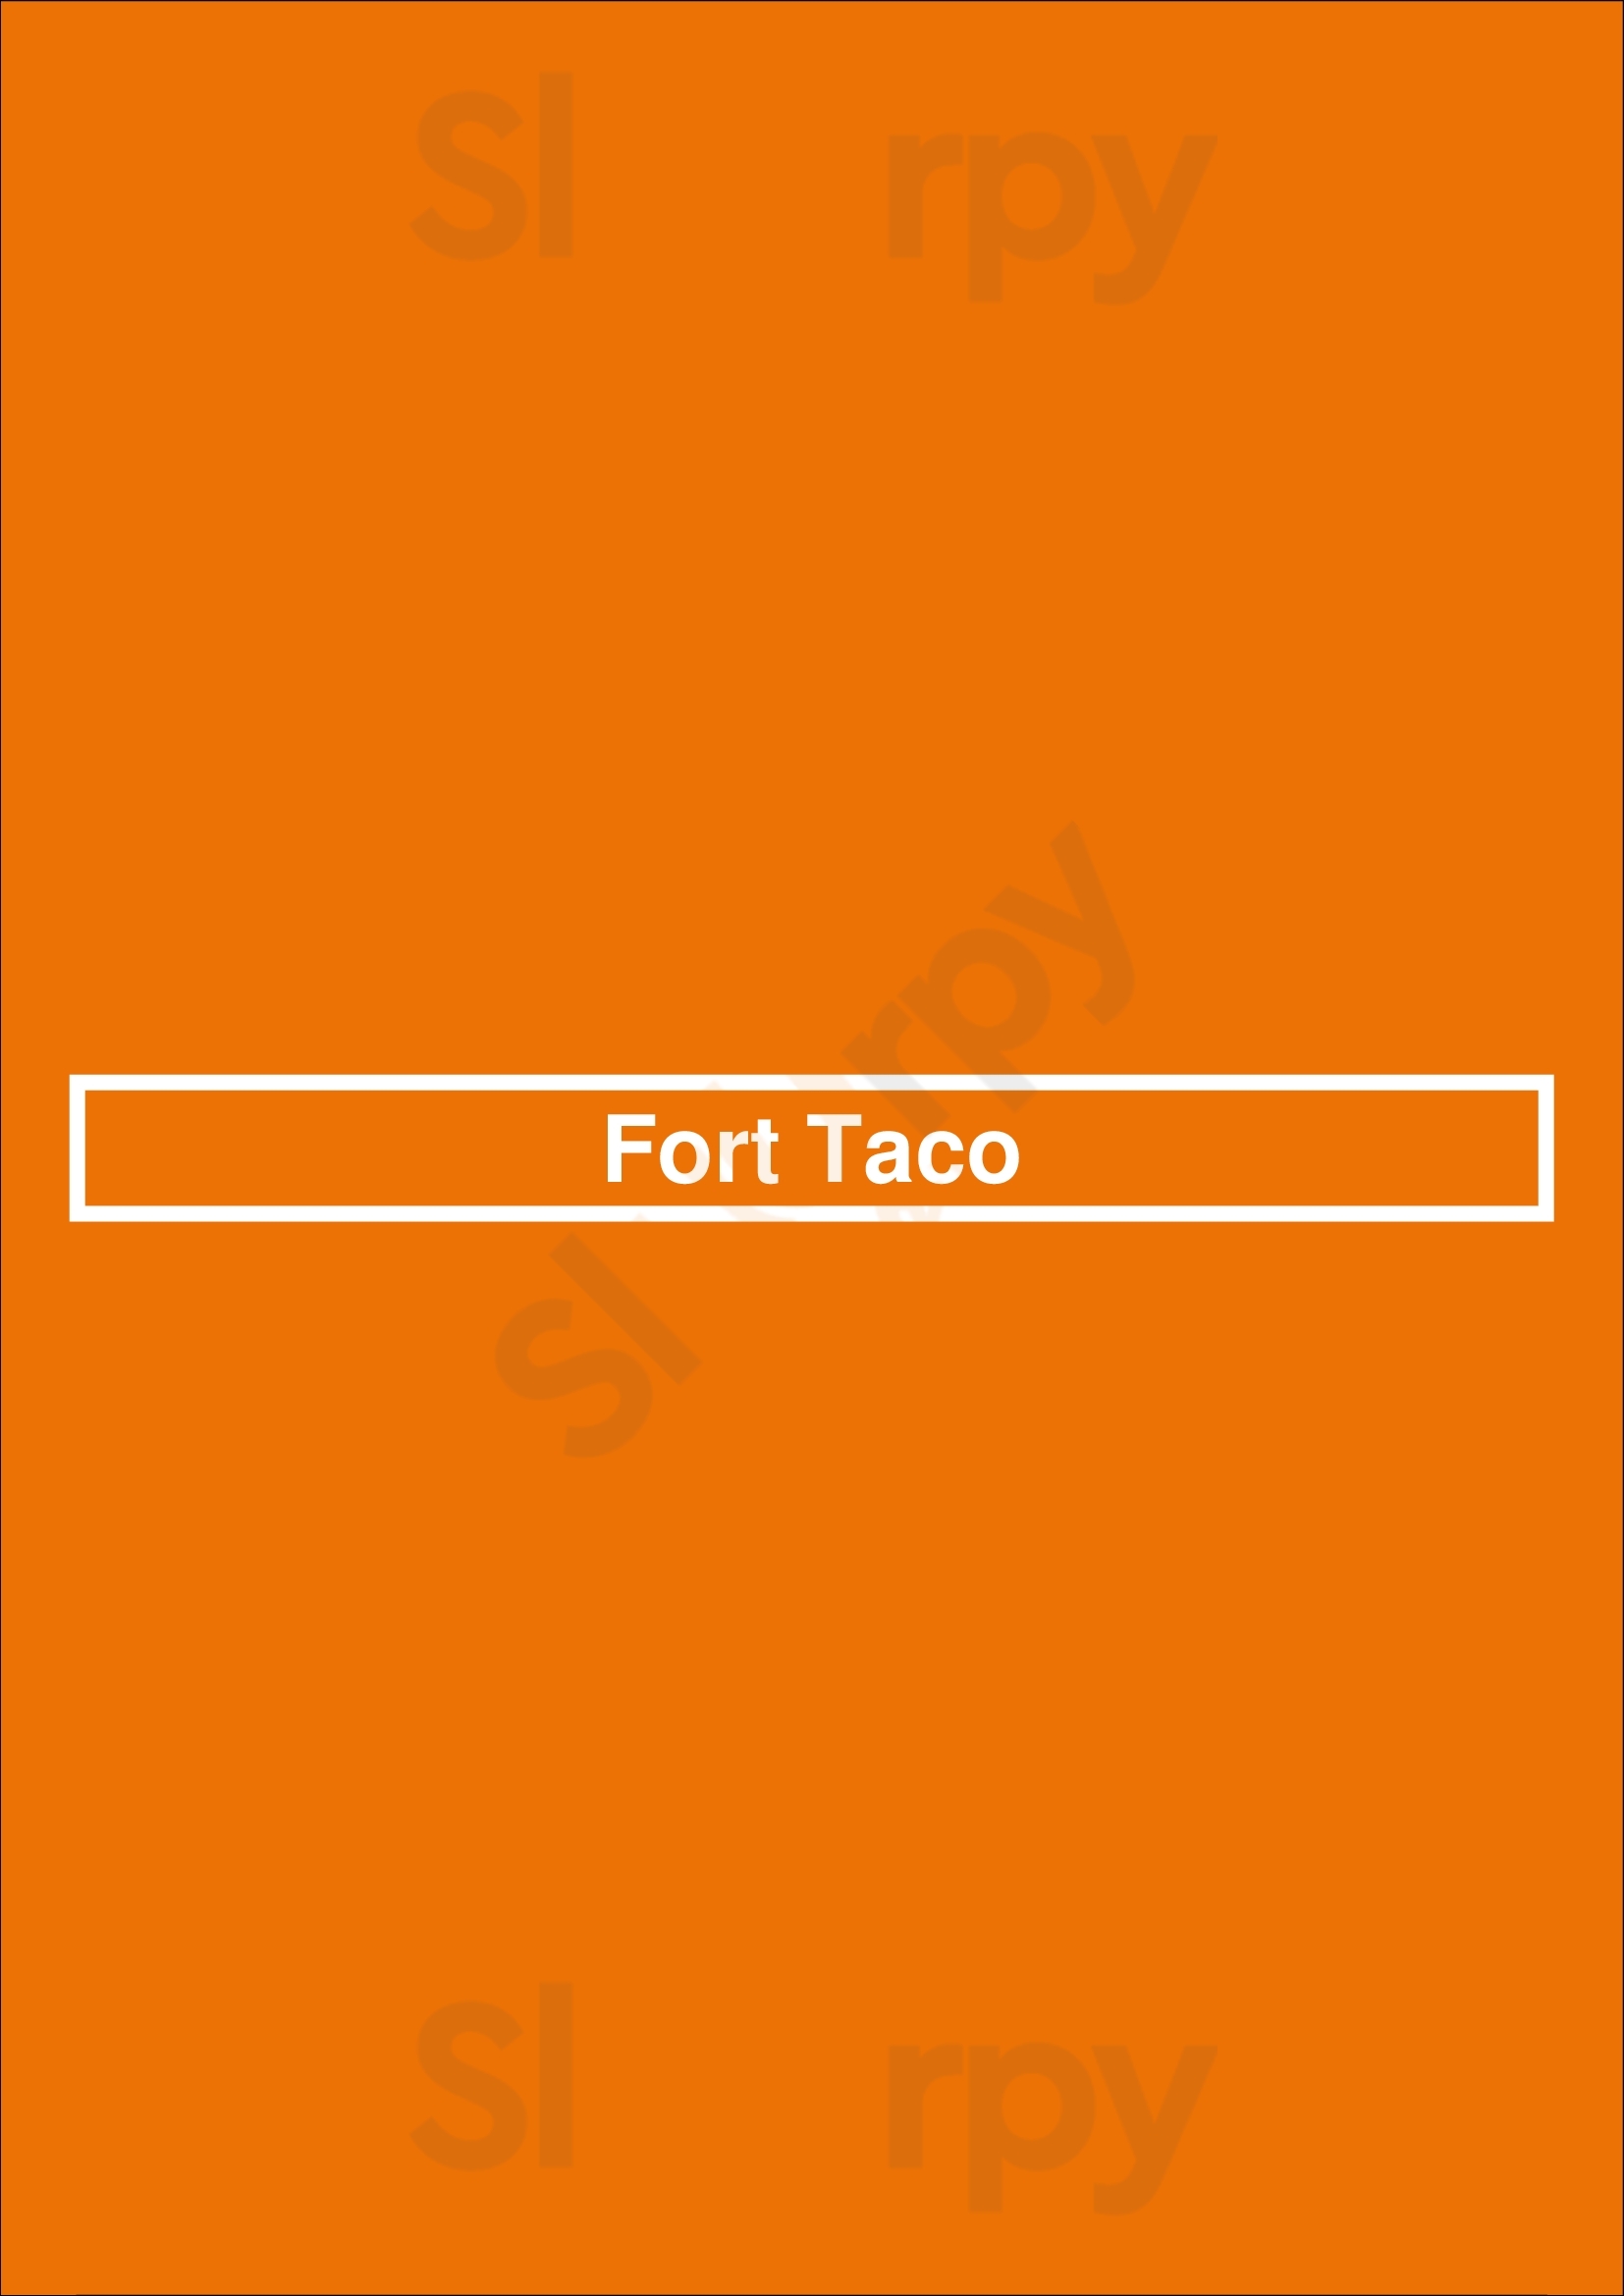 Fort Taco Saint Louis Menu - 1